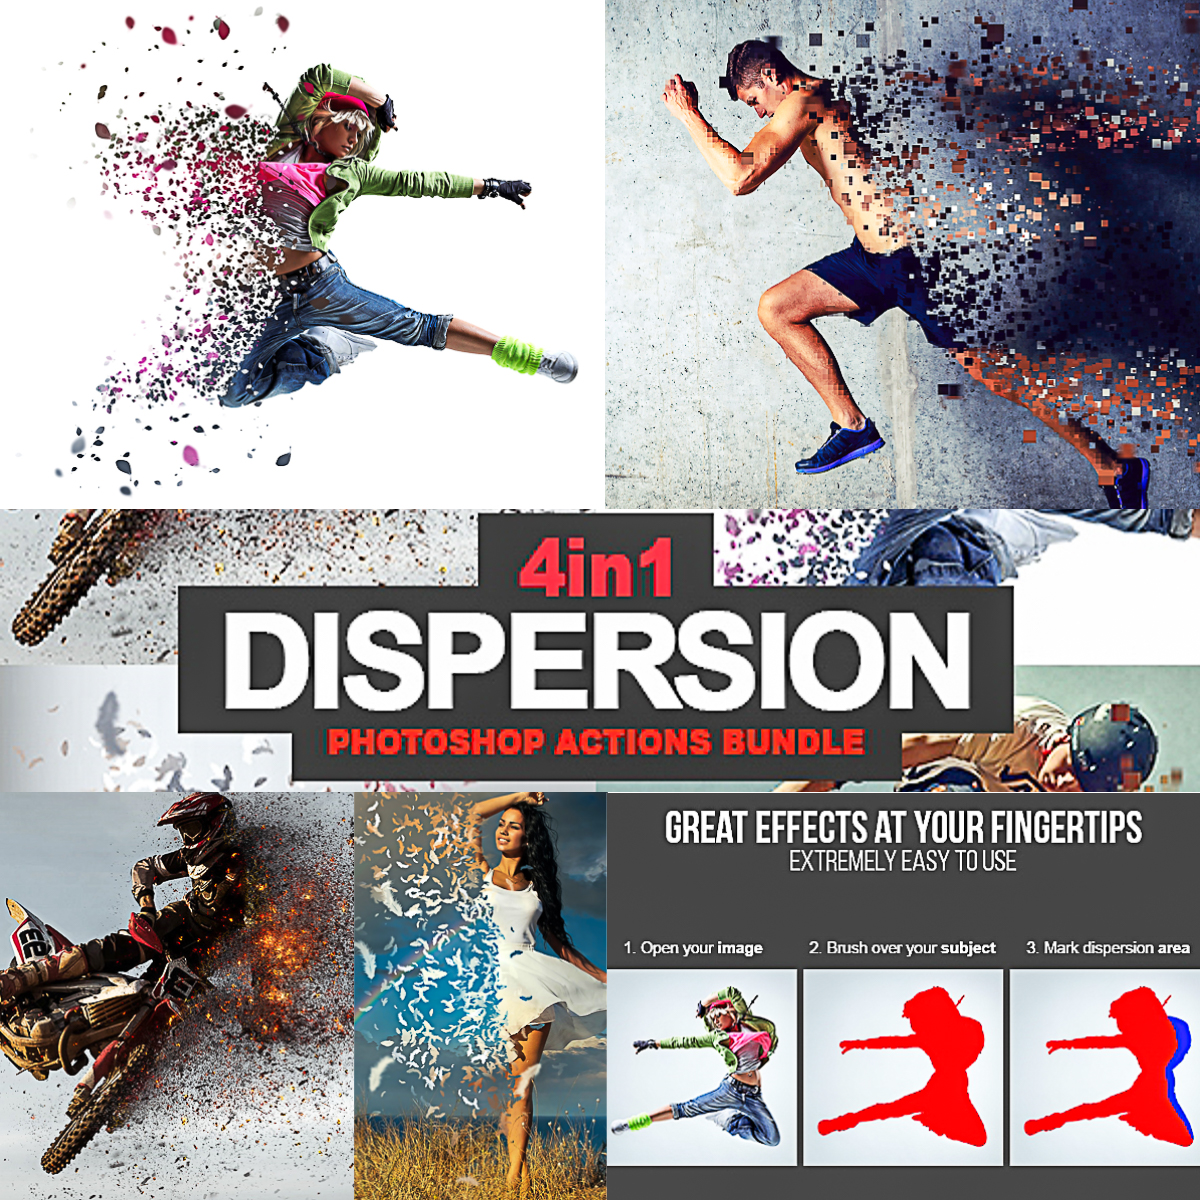 dispersion photoshop action download